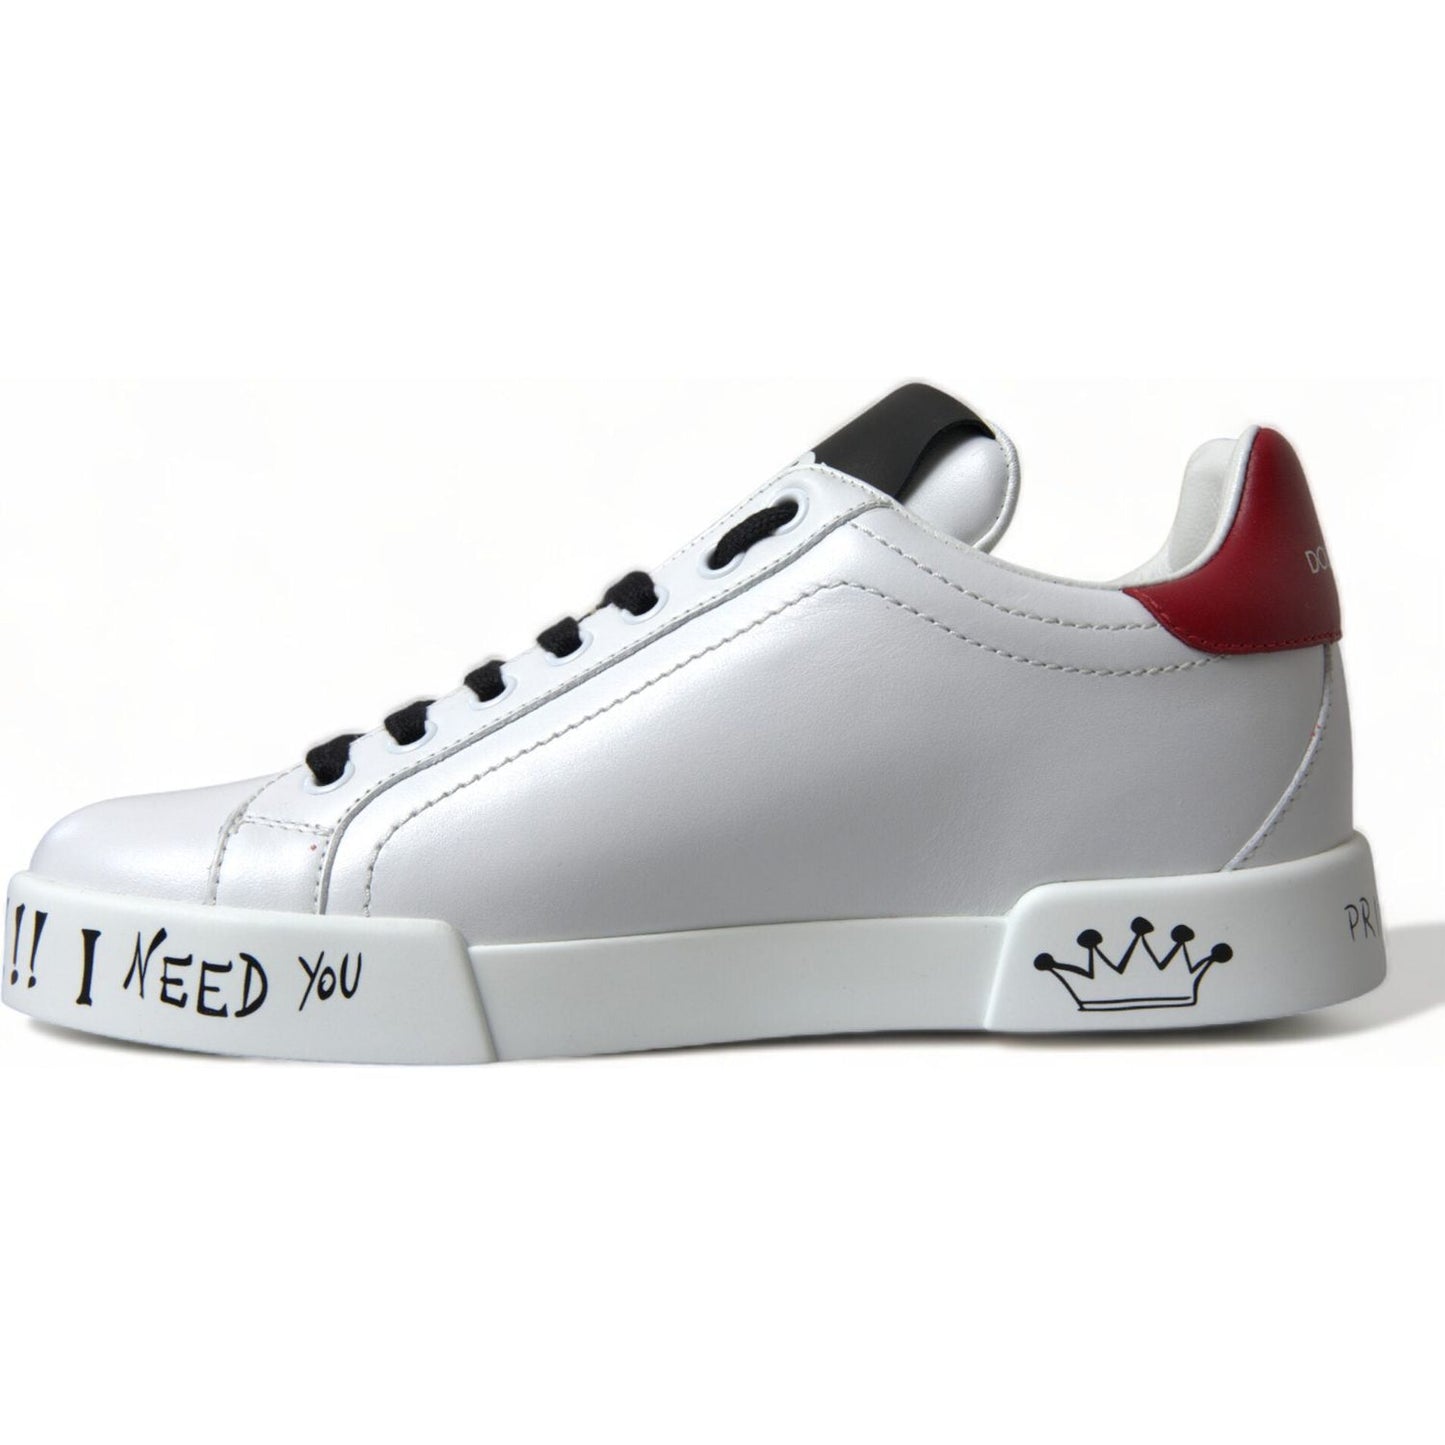 Dolce & Gabbana Chic White Portofino Leather Sneakers white-love-patch-portofino-classic-sneakers-shoes